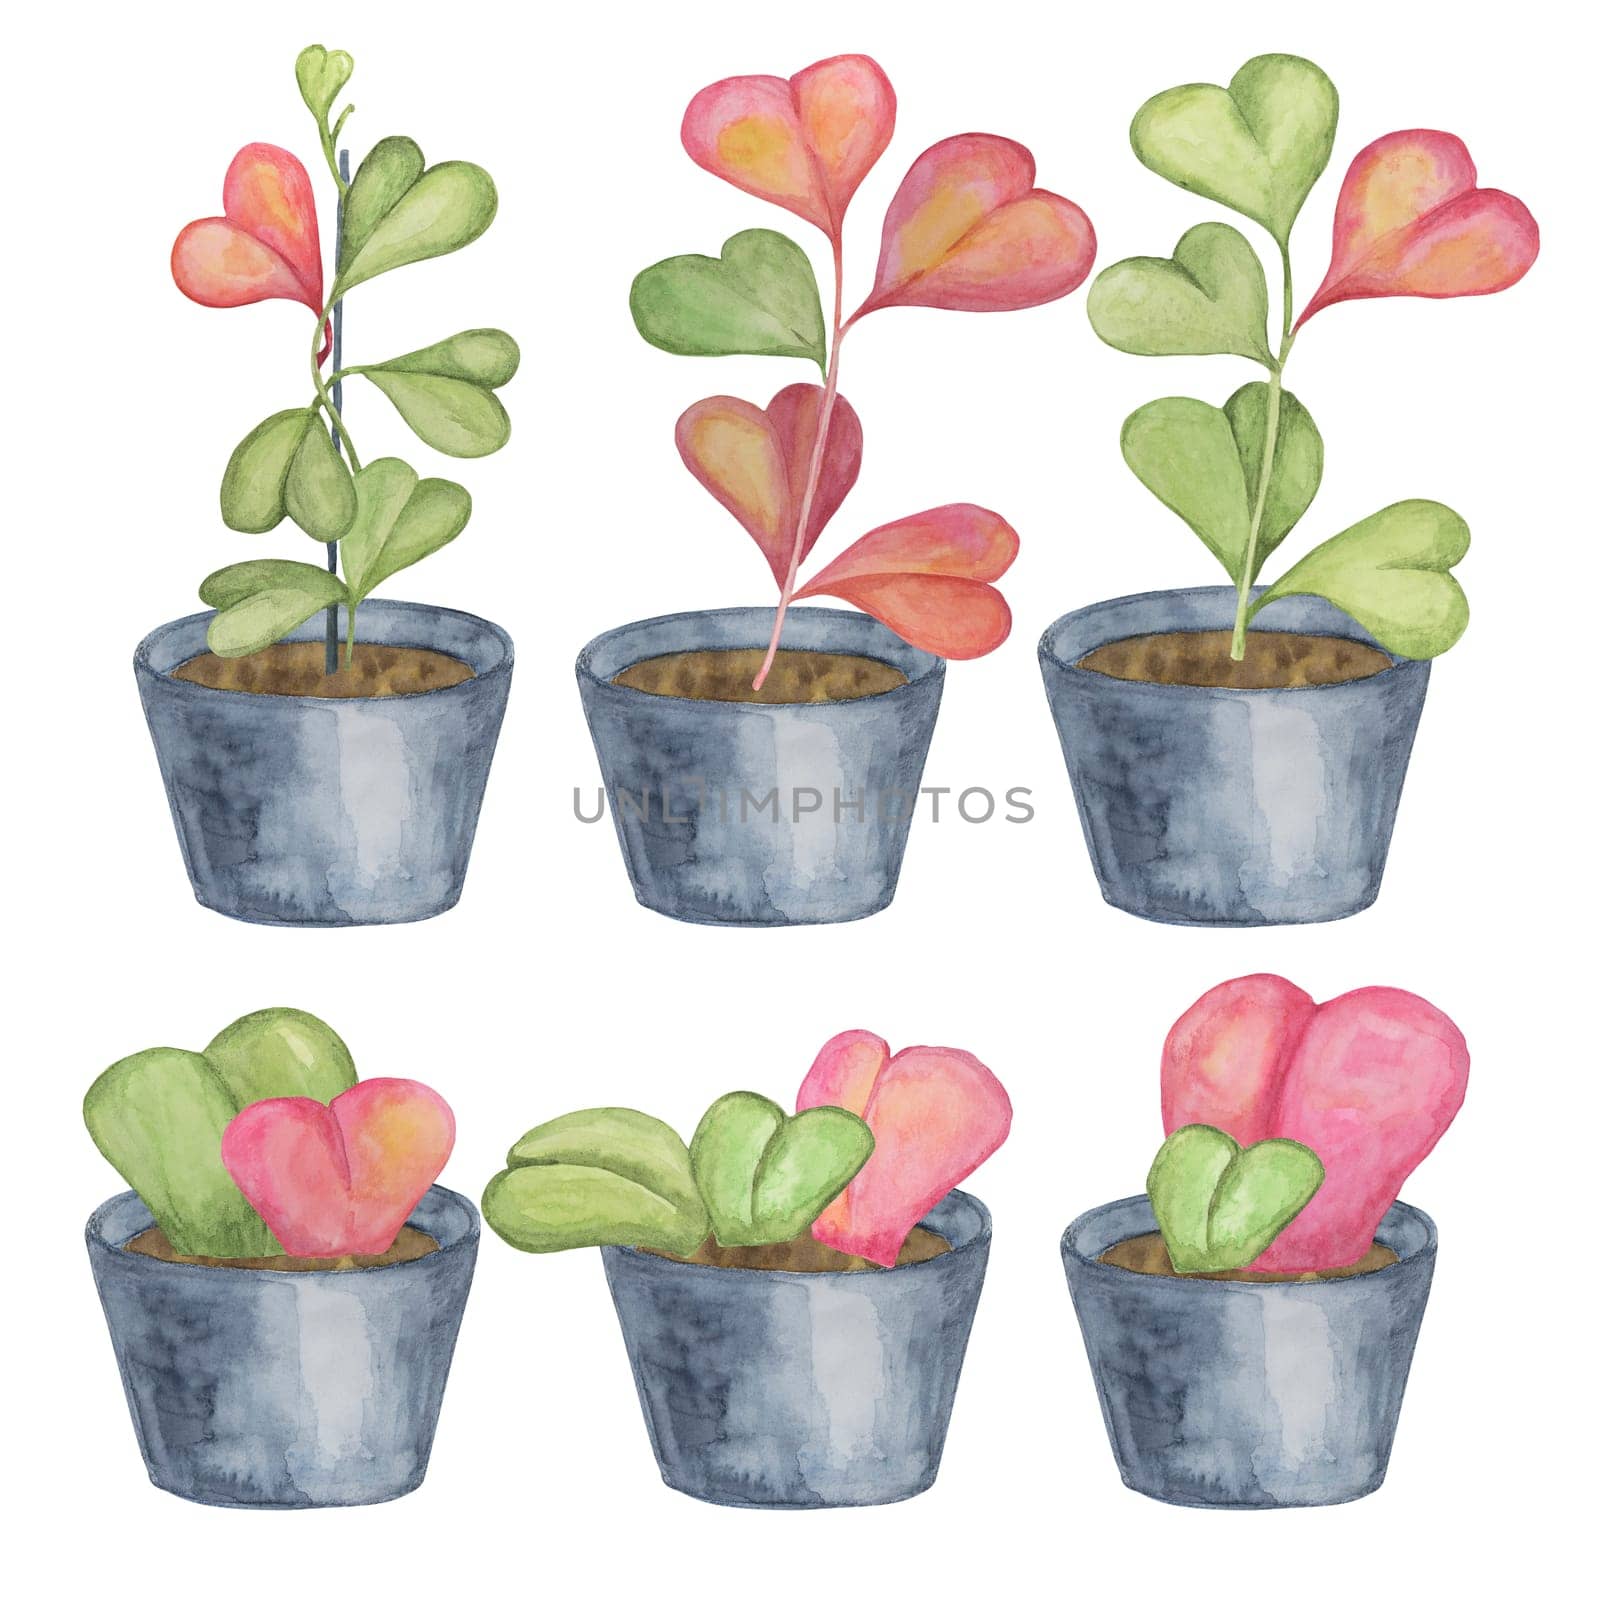 Six hoya kerrii plants in watercolor by Fofito